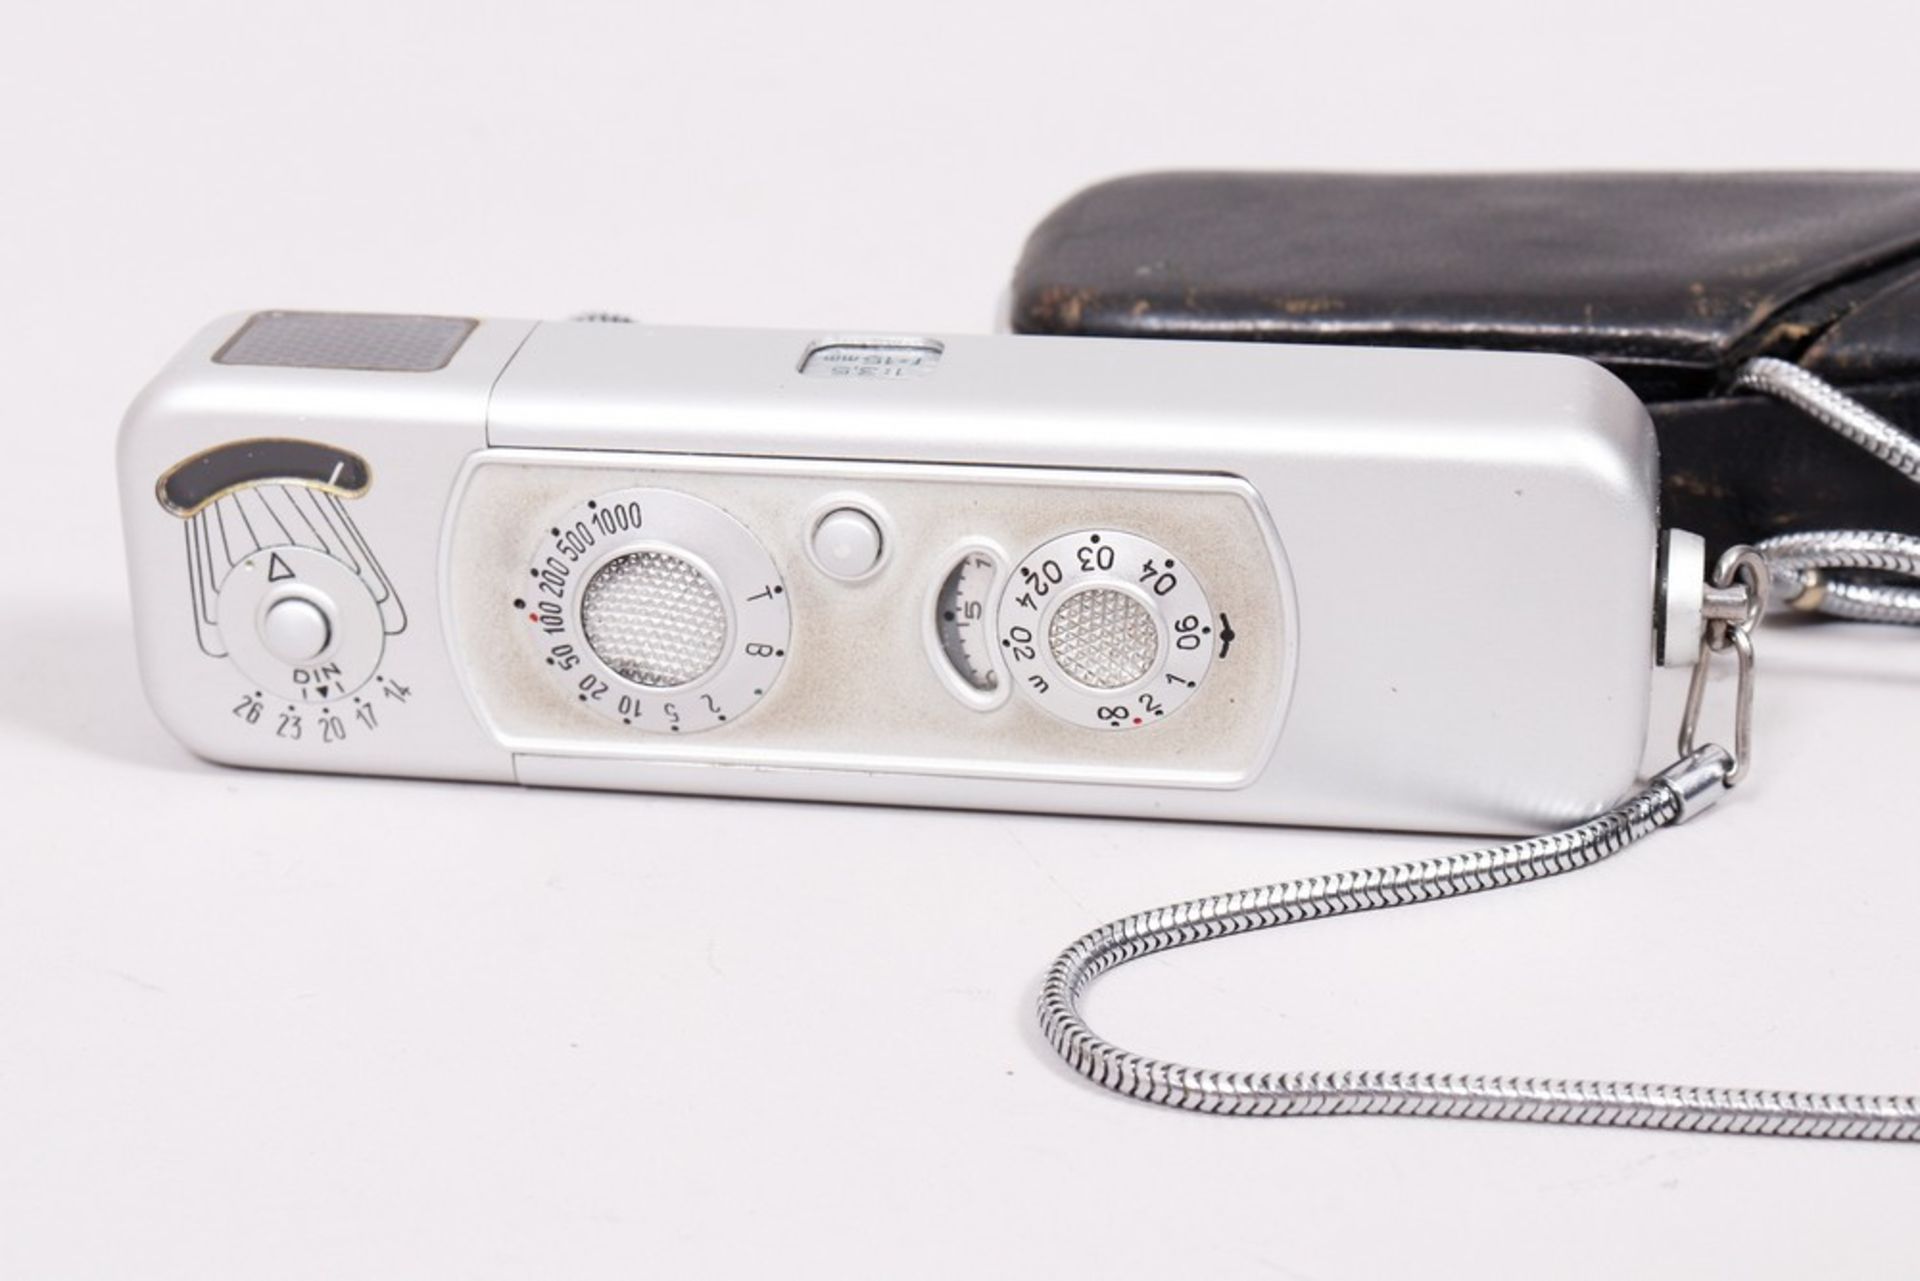 Miniature camera, Minox, around 1963/64 - Image 2 of 4